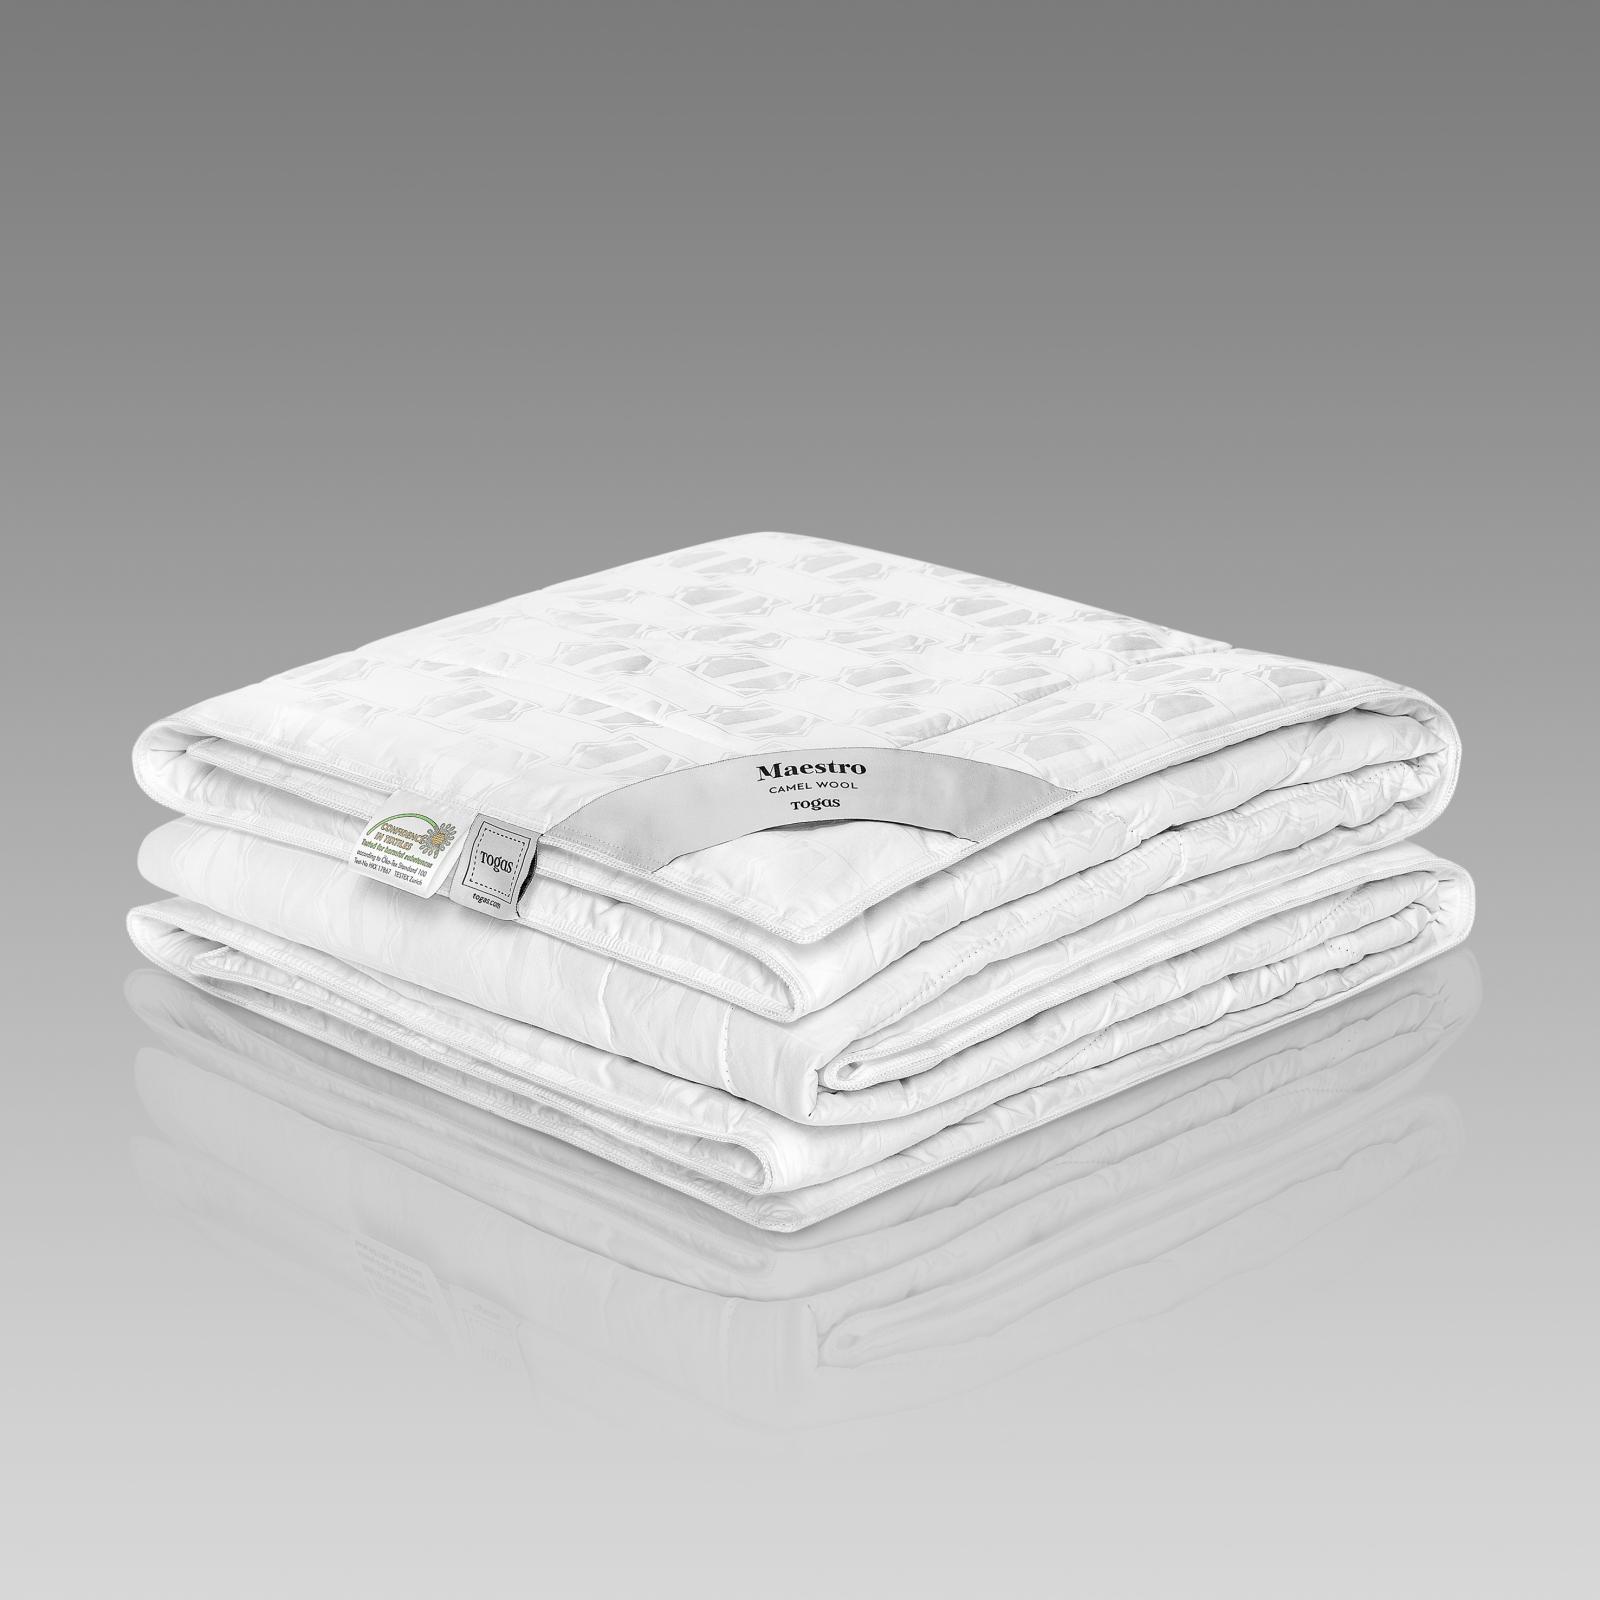 Одеяло Togas Маэстро белое 140х200 см (20.04.17.0088) одеяло marc anri rouffach белое 140х200 см ma ec